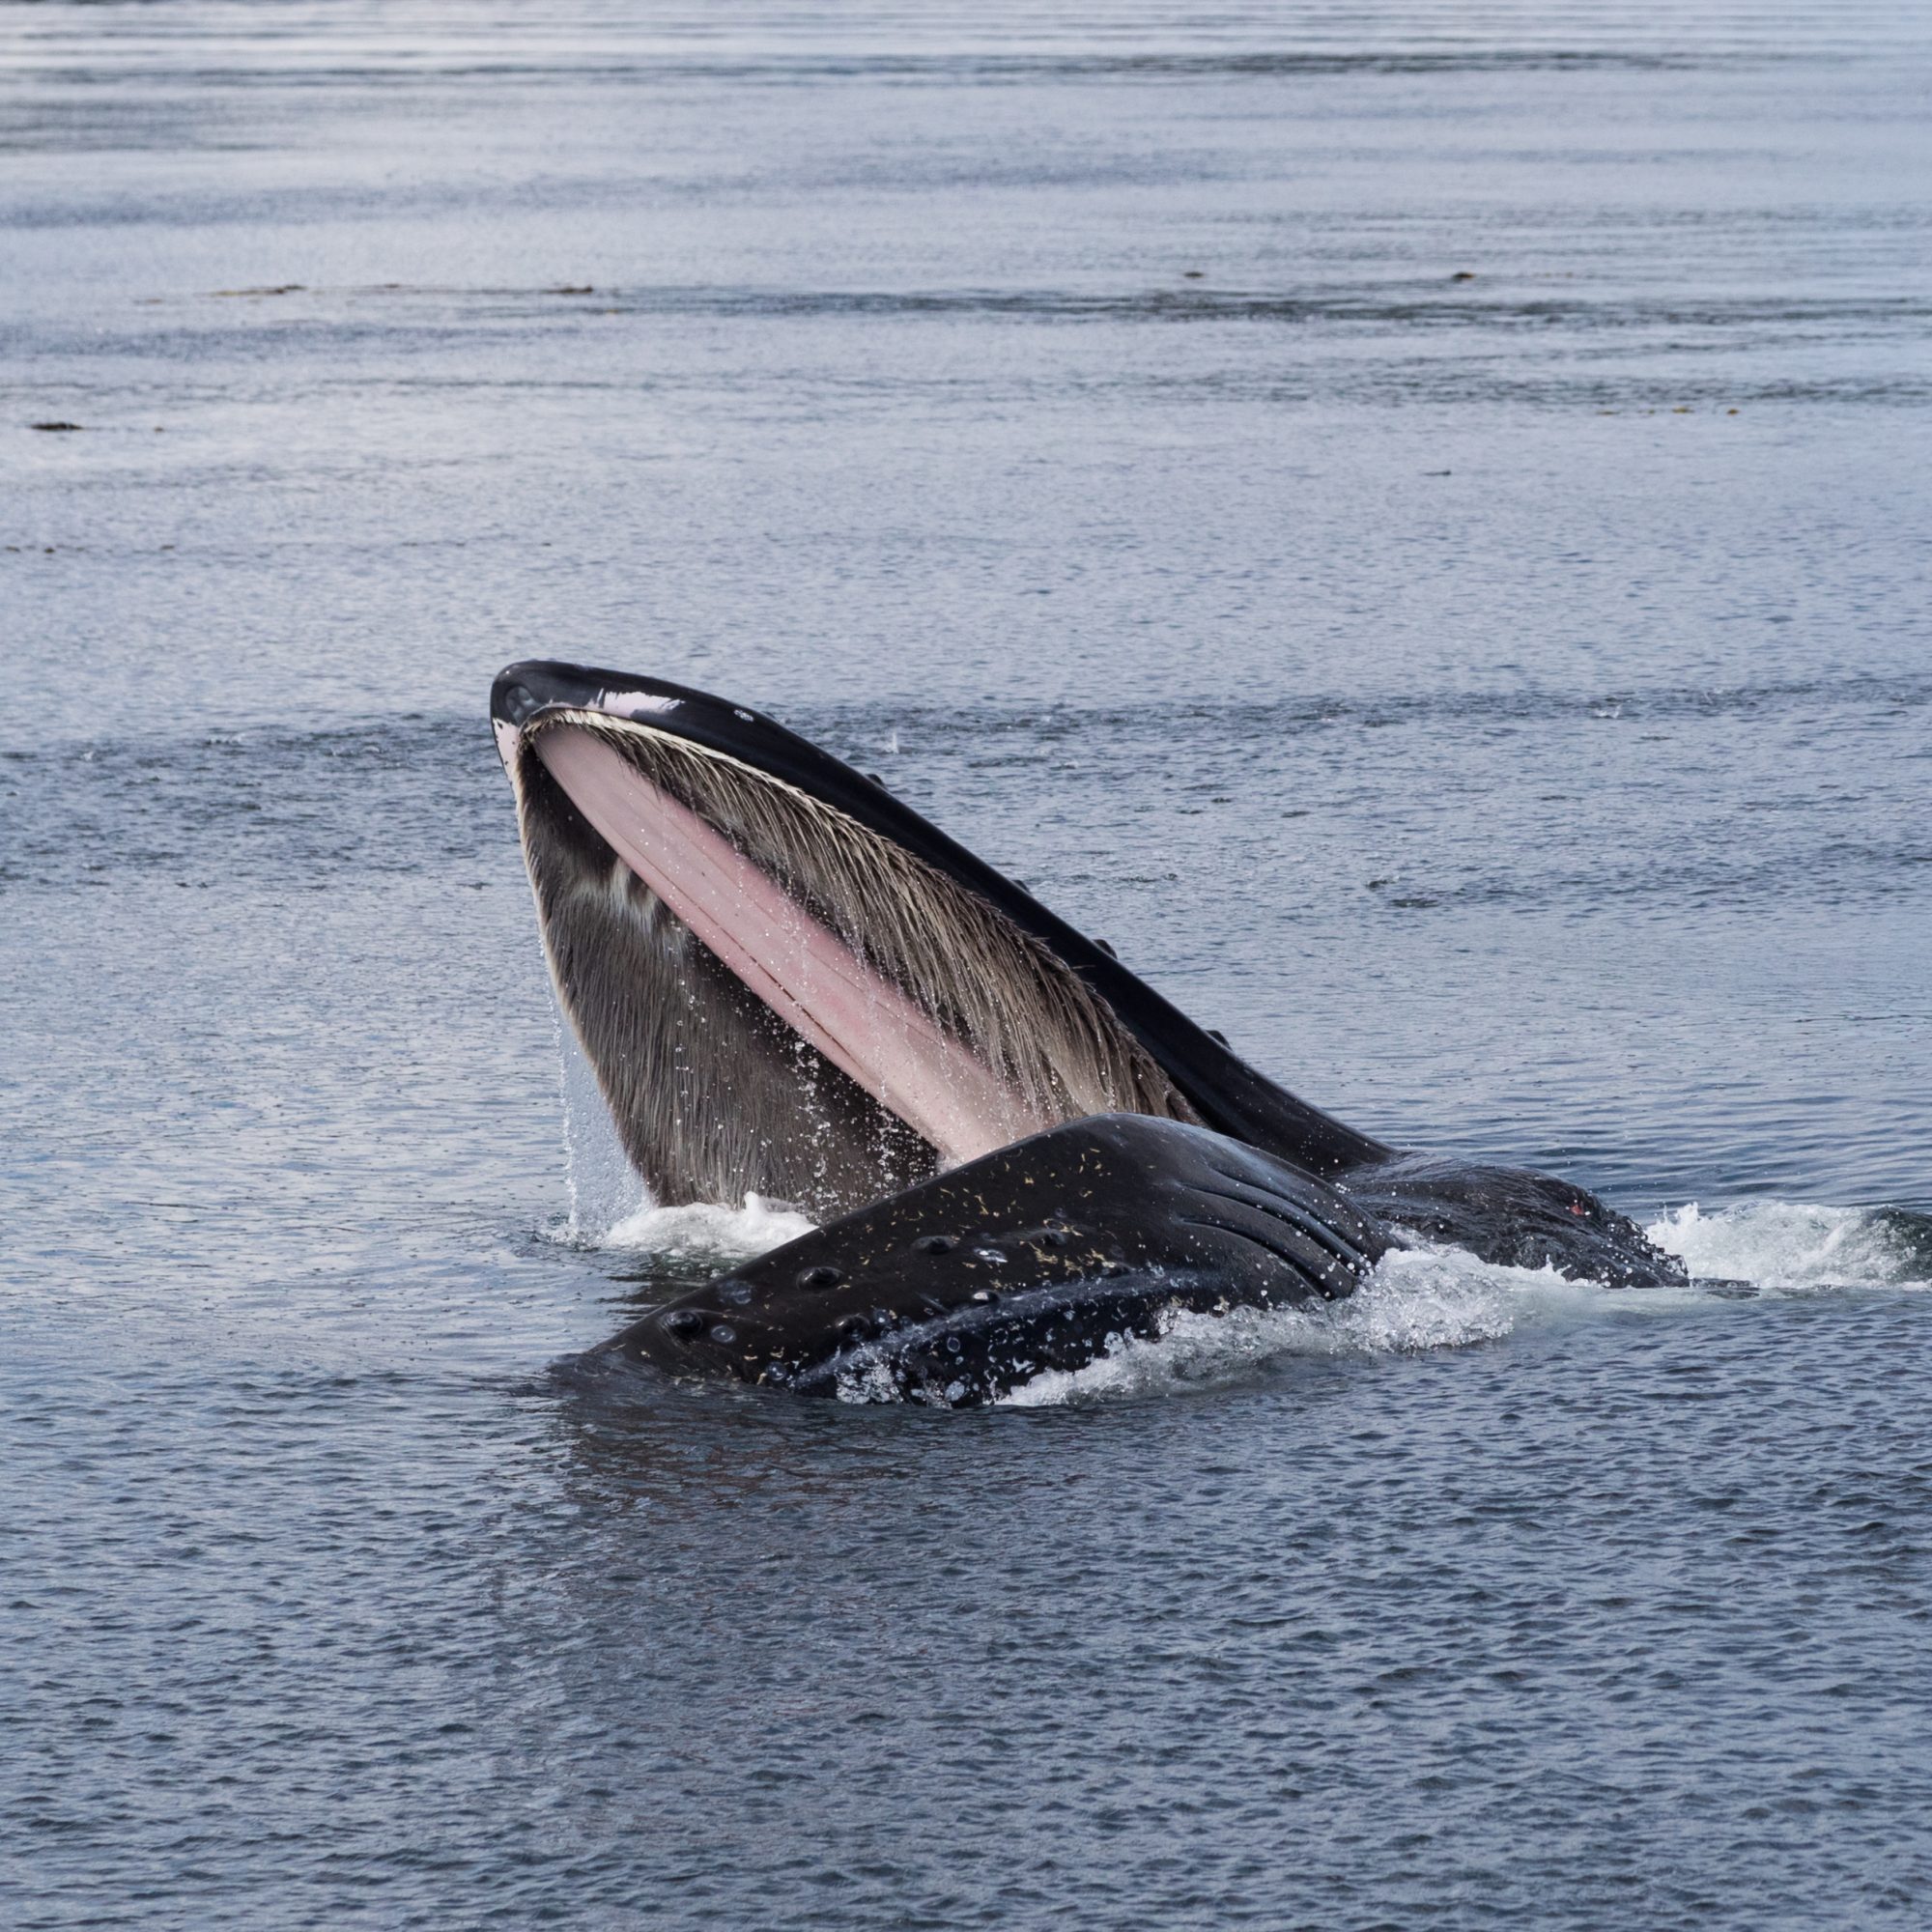 Lunge-feeding Humpback Whales – Alaska, 2016